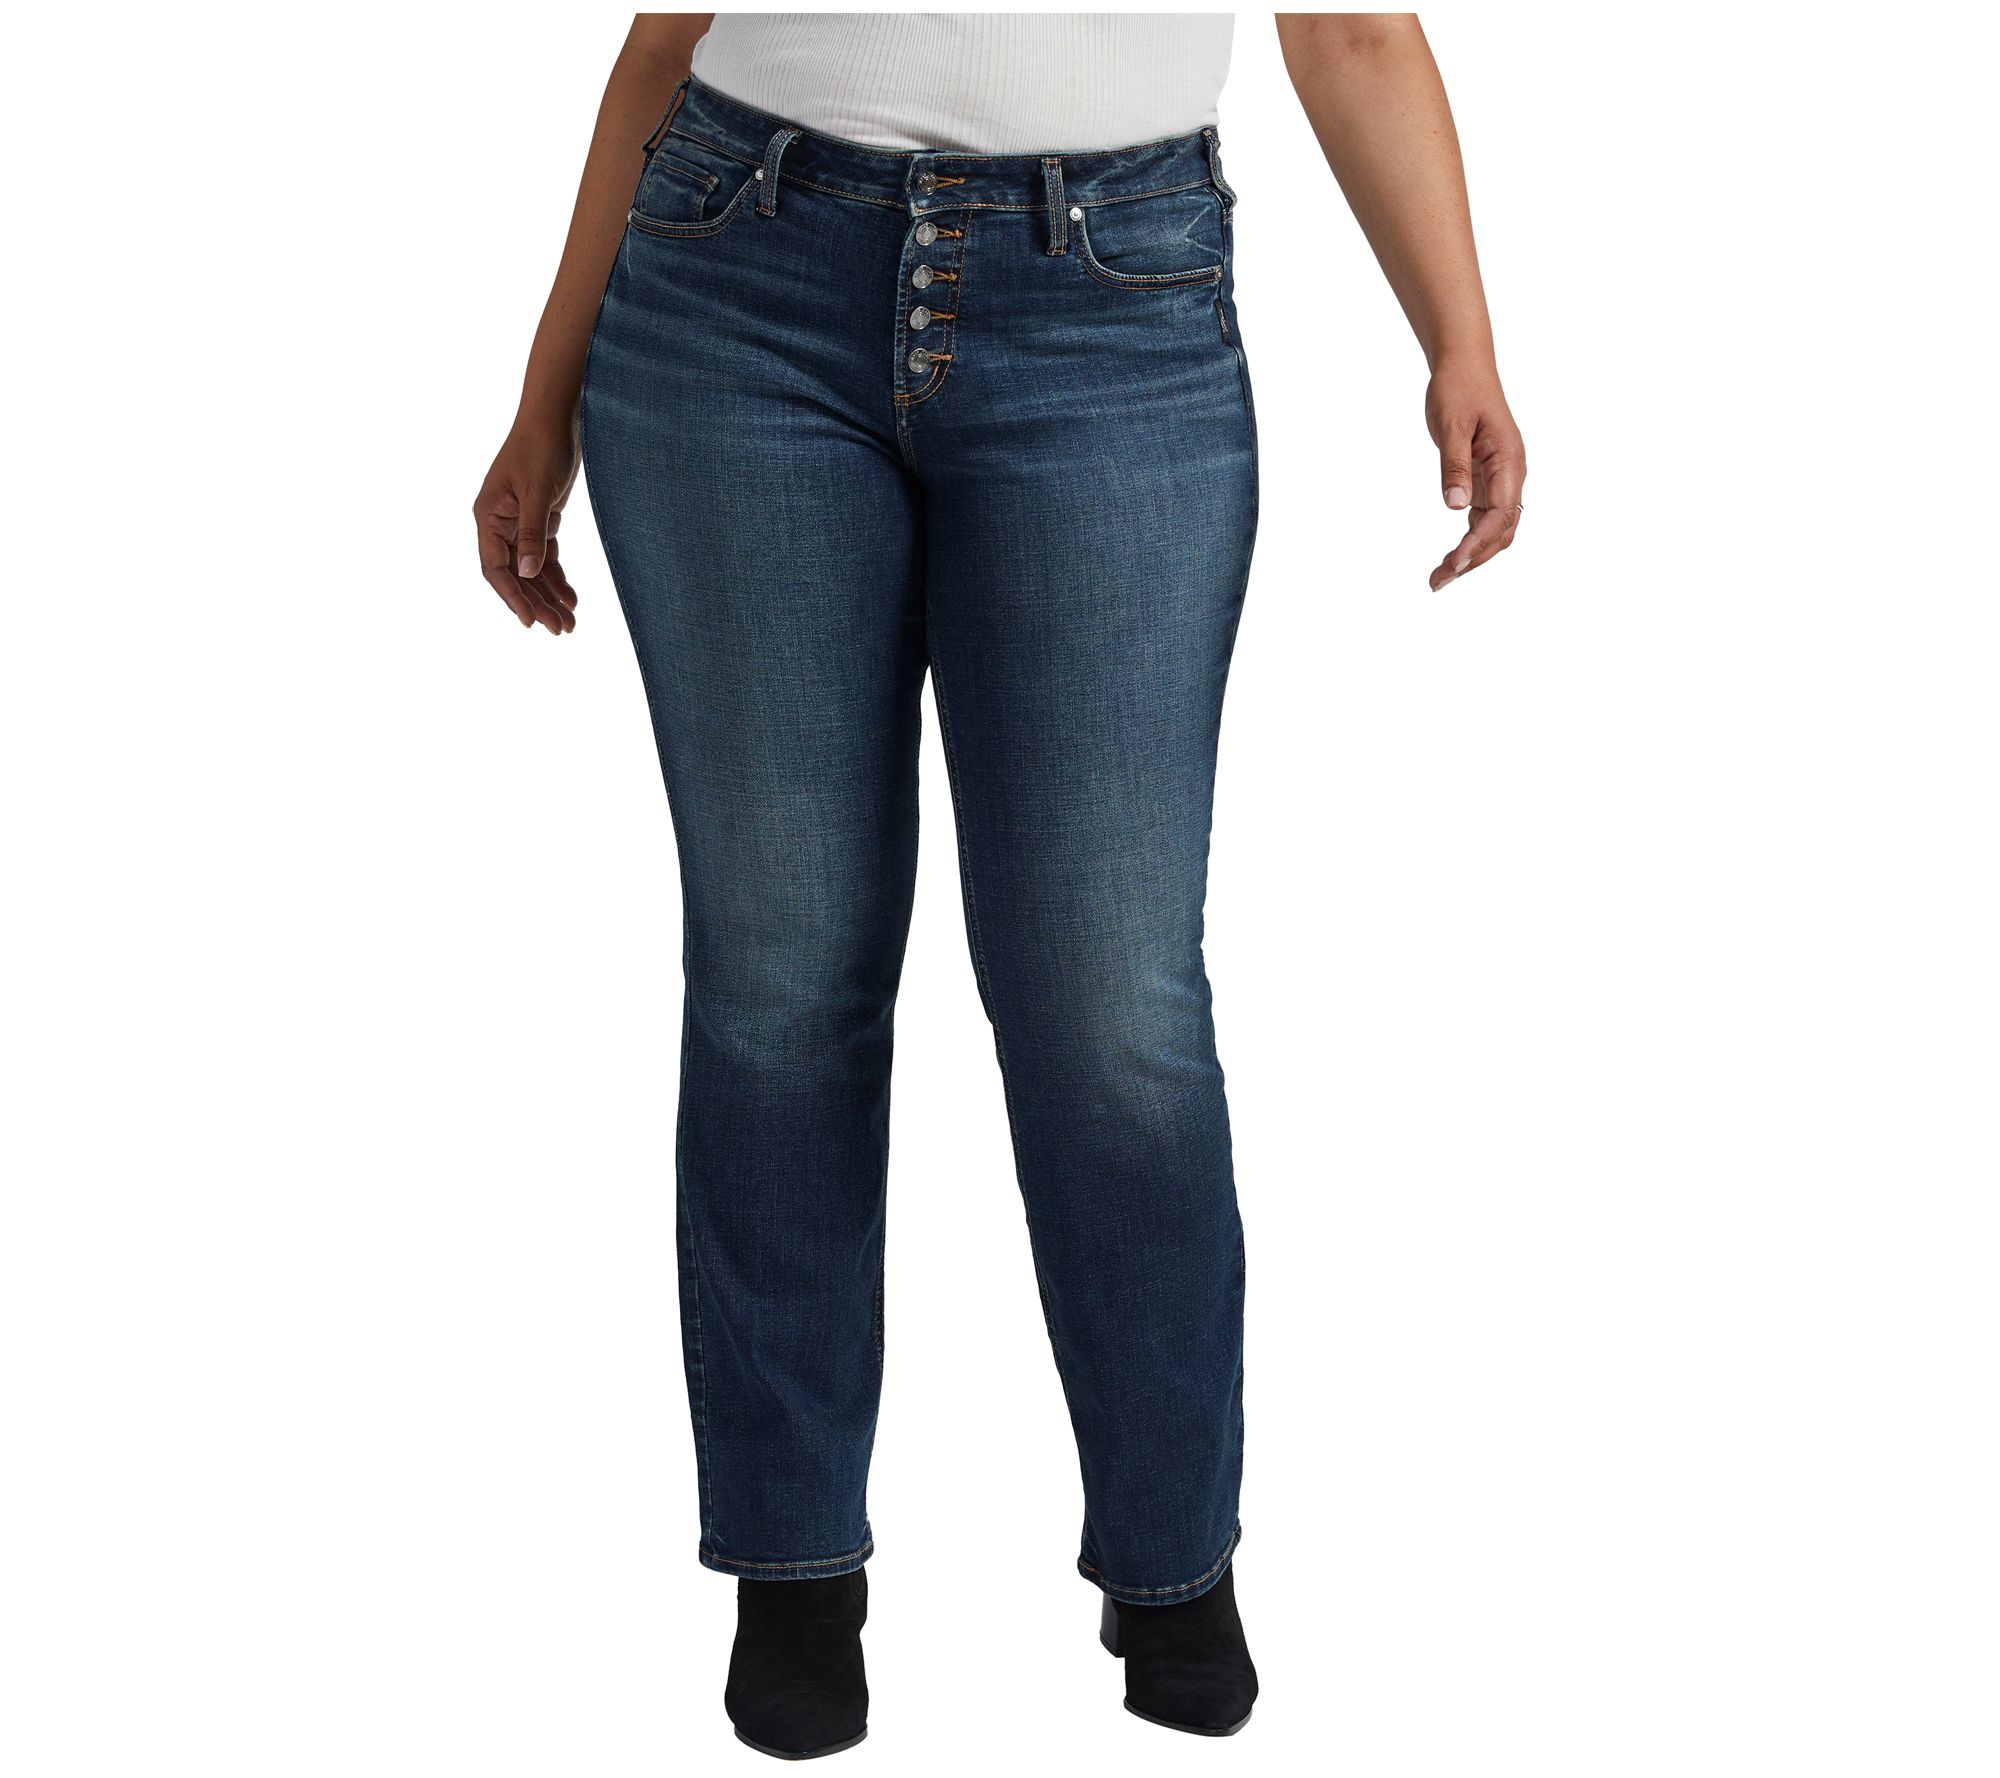 Silver Jeans Co. Plus Size Suki Mid Rise Straight Leg Jeans